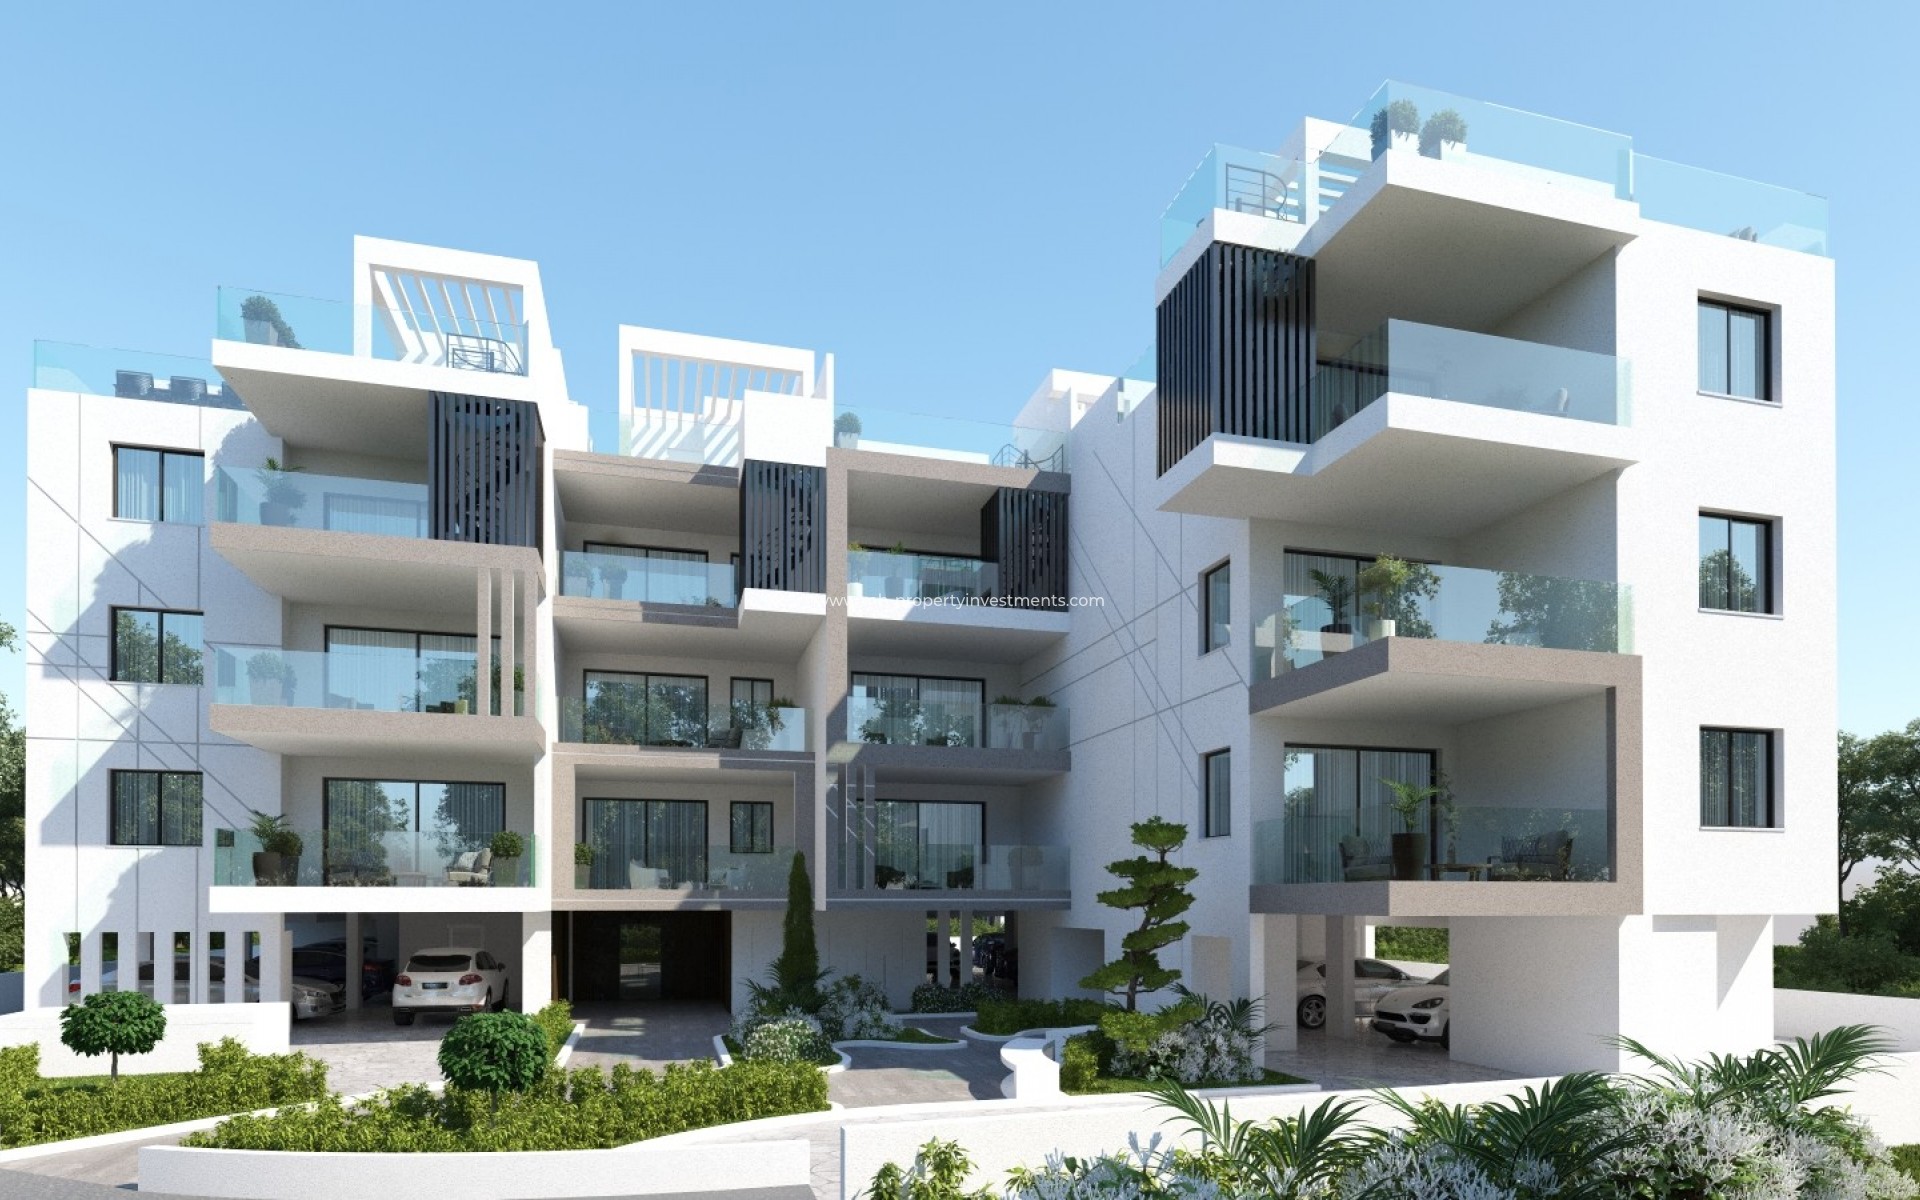 under construction - Apartment - Larnaca - Aradippou